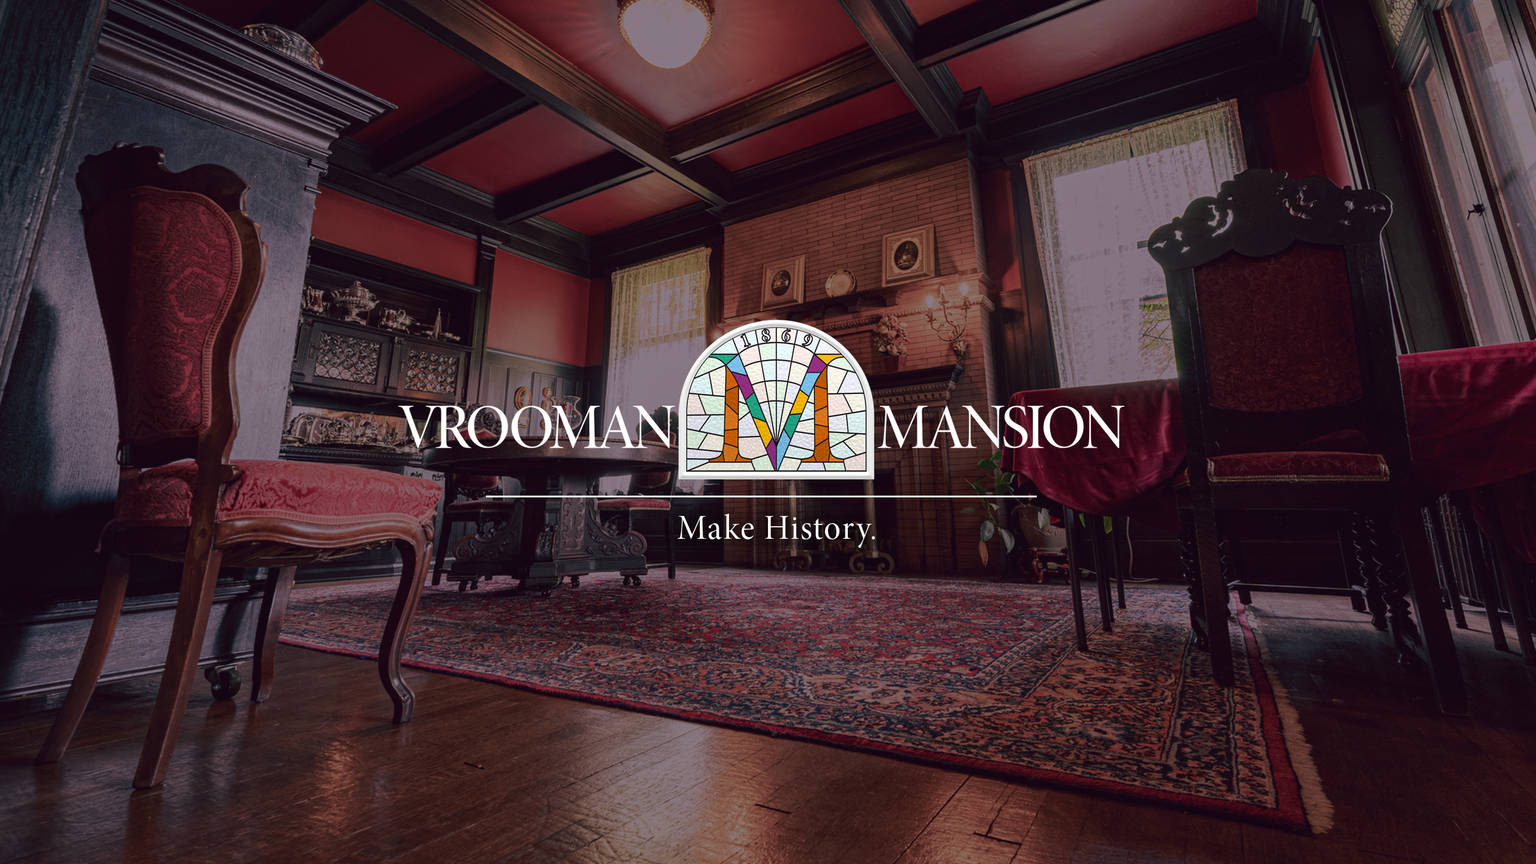 Vrooman Mansion